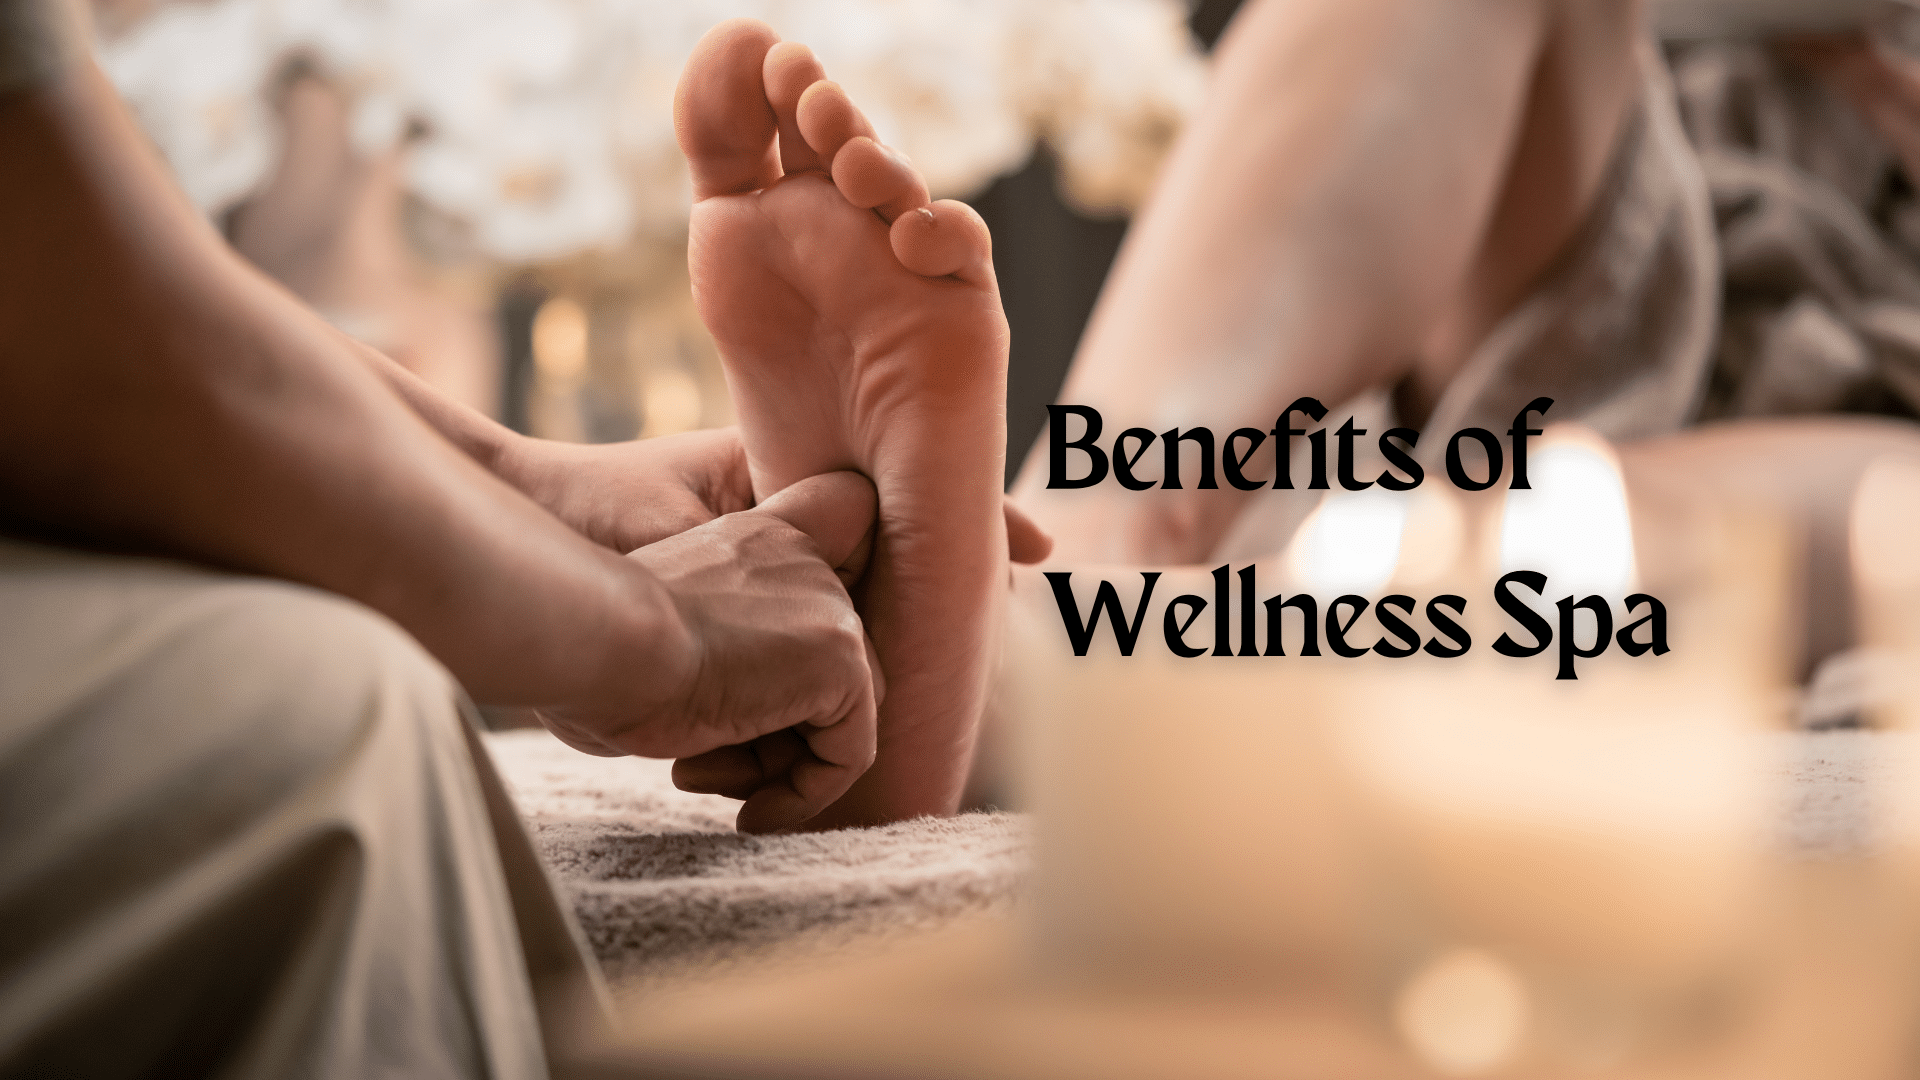 Benefits of Wellness Spa